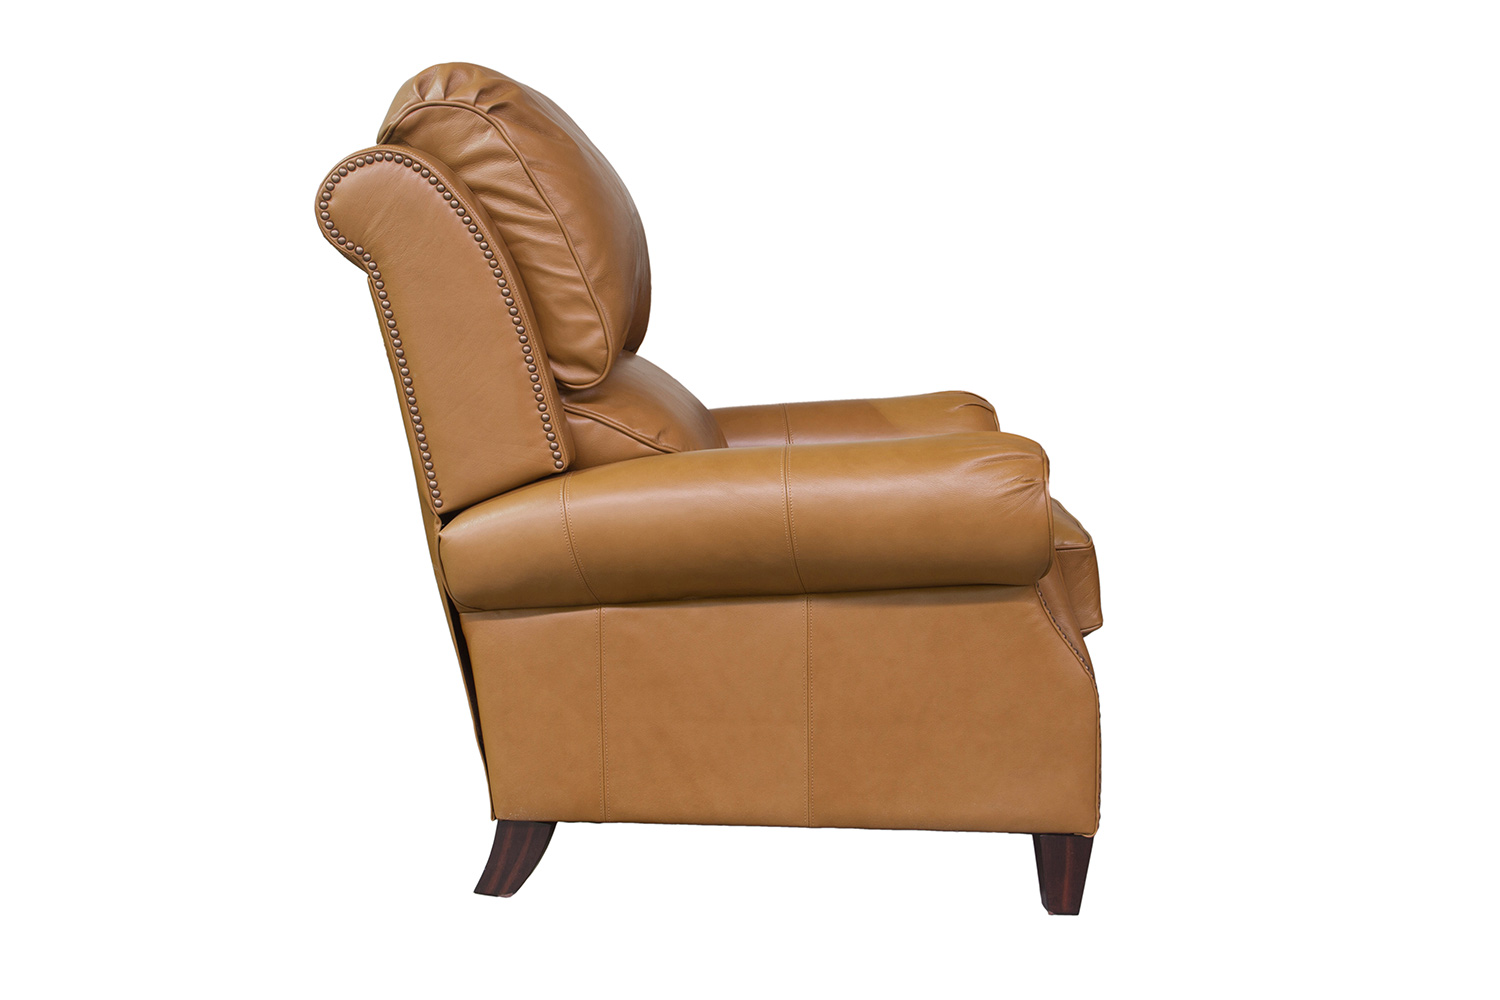 Barcalounger Churchill Recliner Chair - Shoreham Ponytail/All Leather